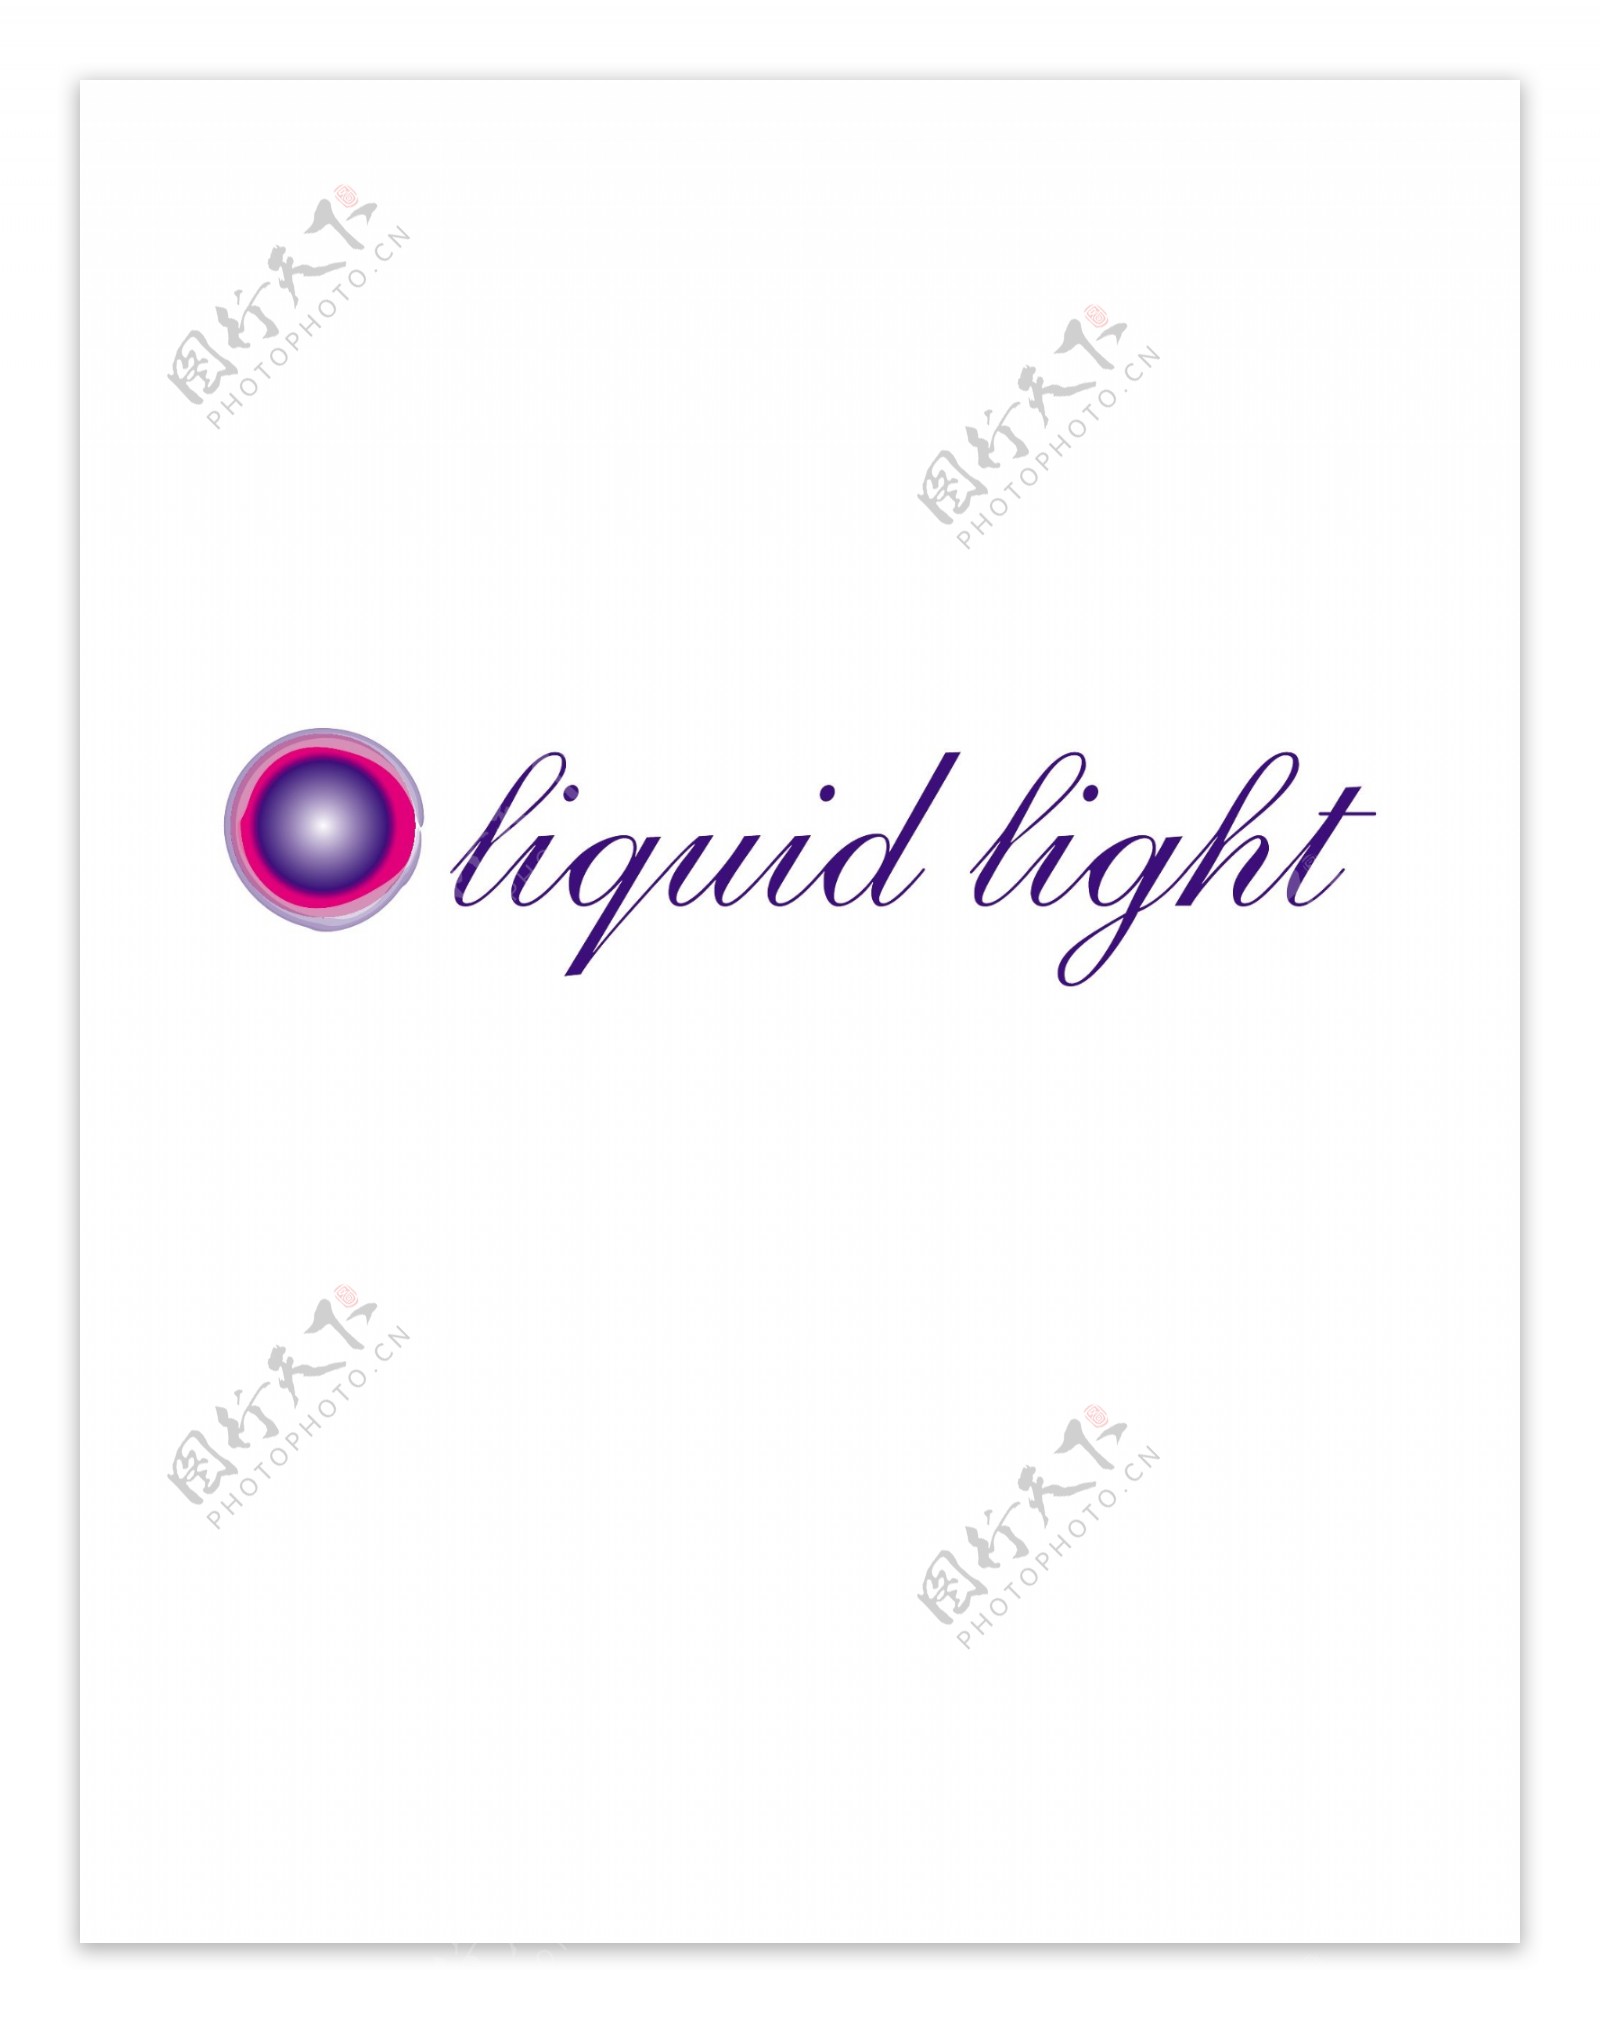 LiquidLightlogo设计欣赏LiquidLight卫生机构标志下载标志设计欣赏